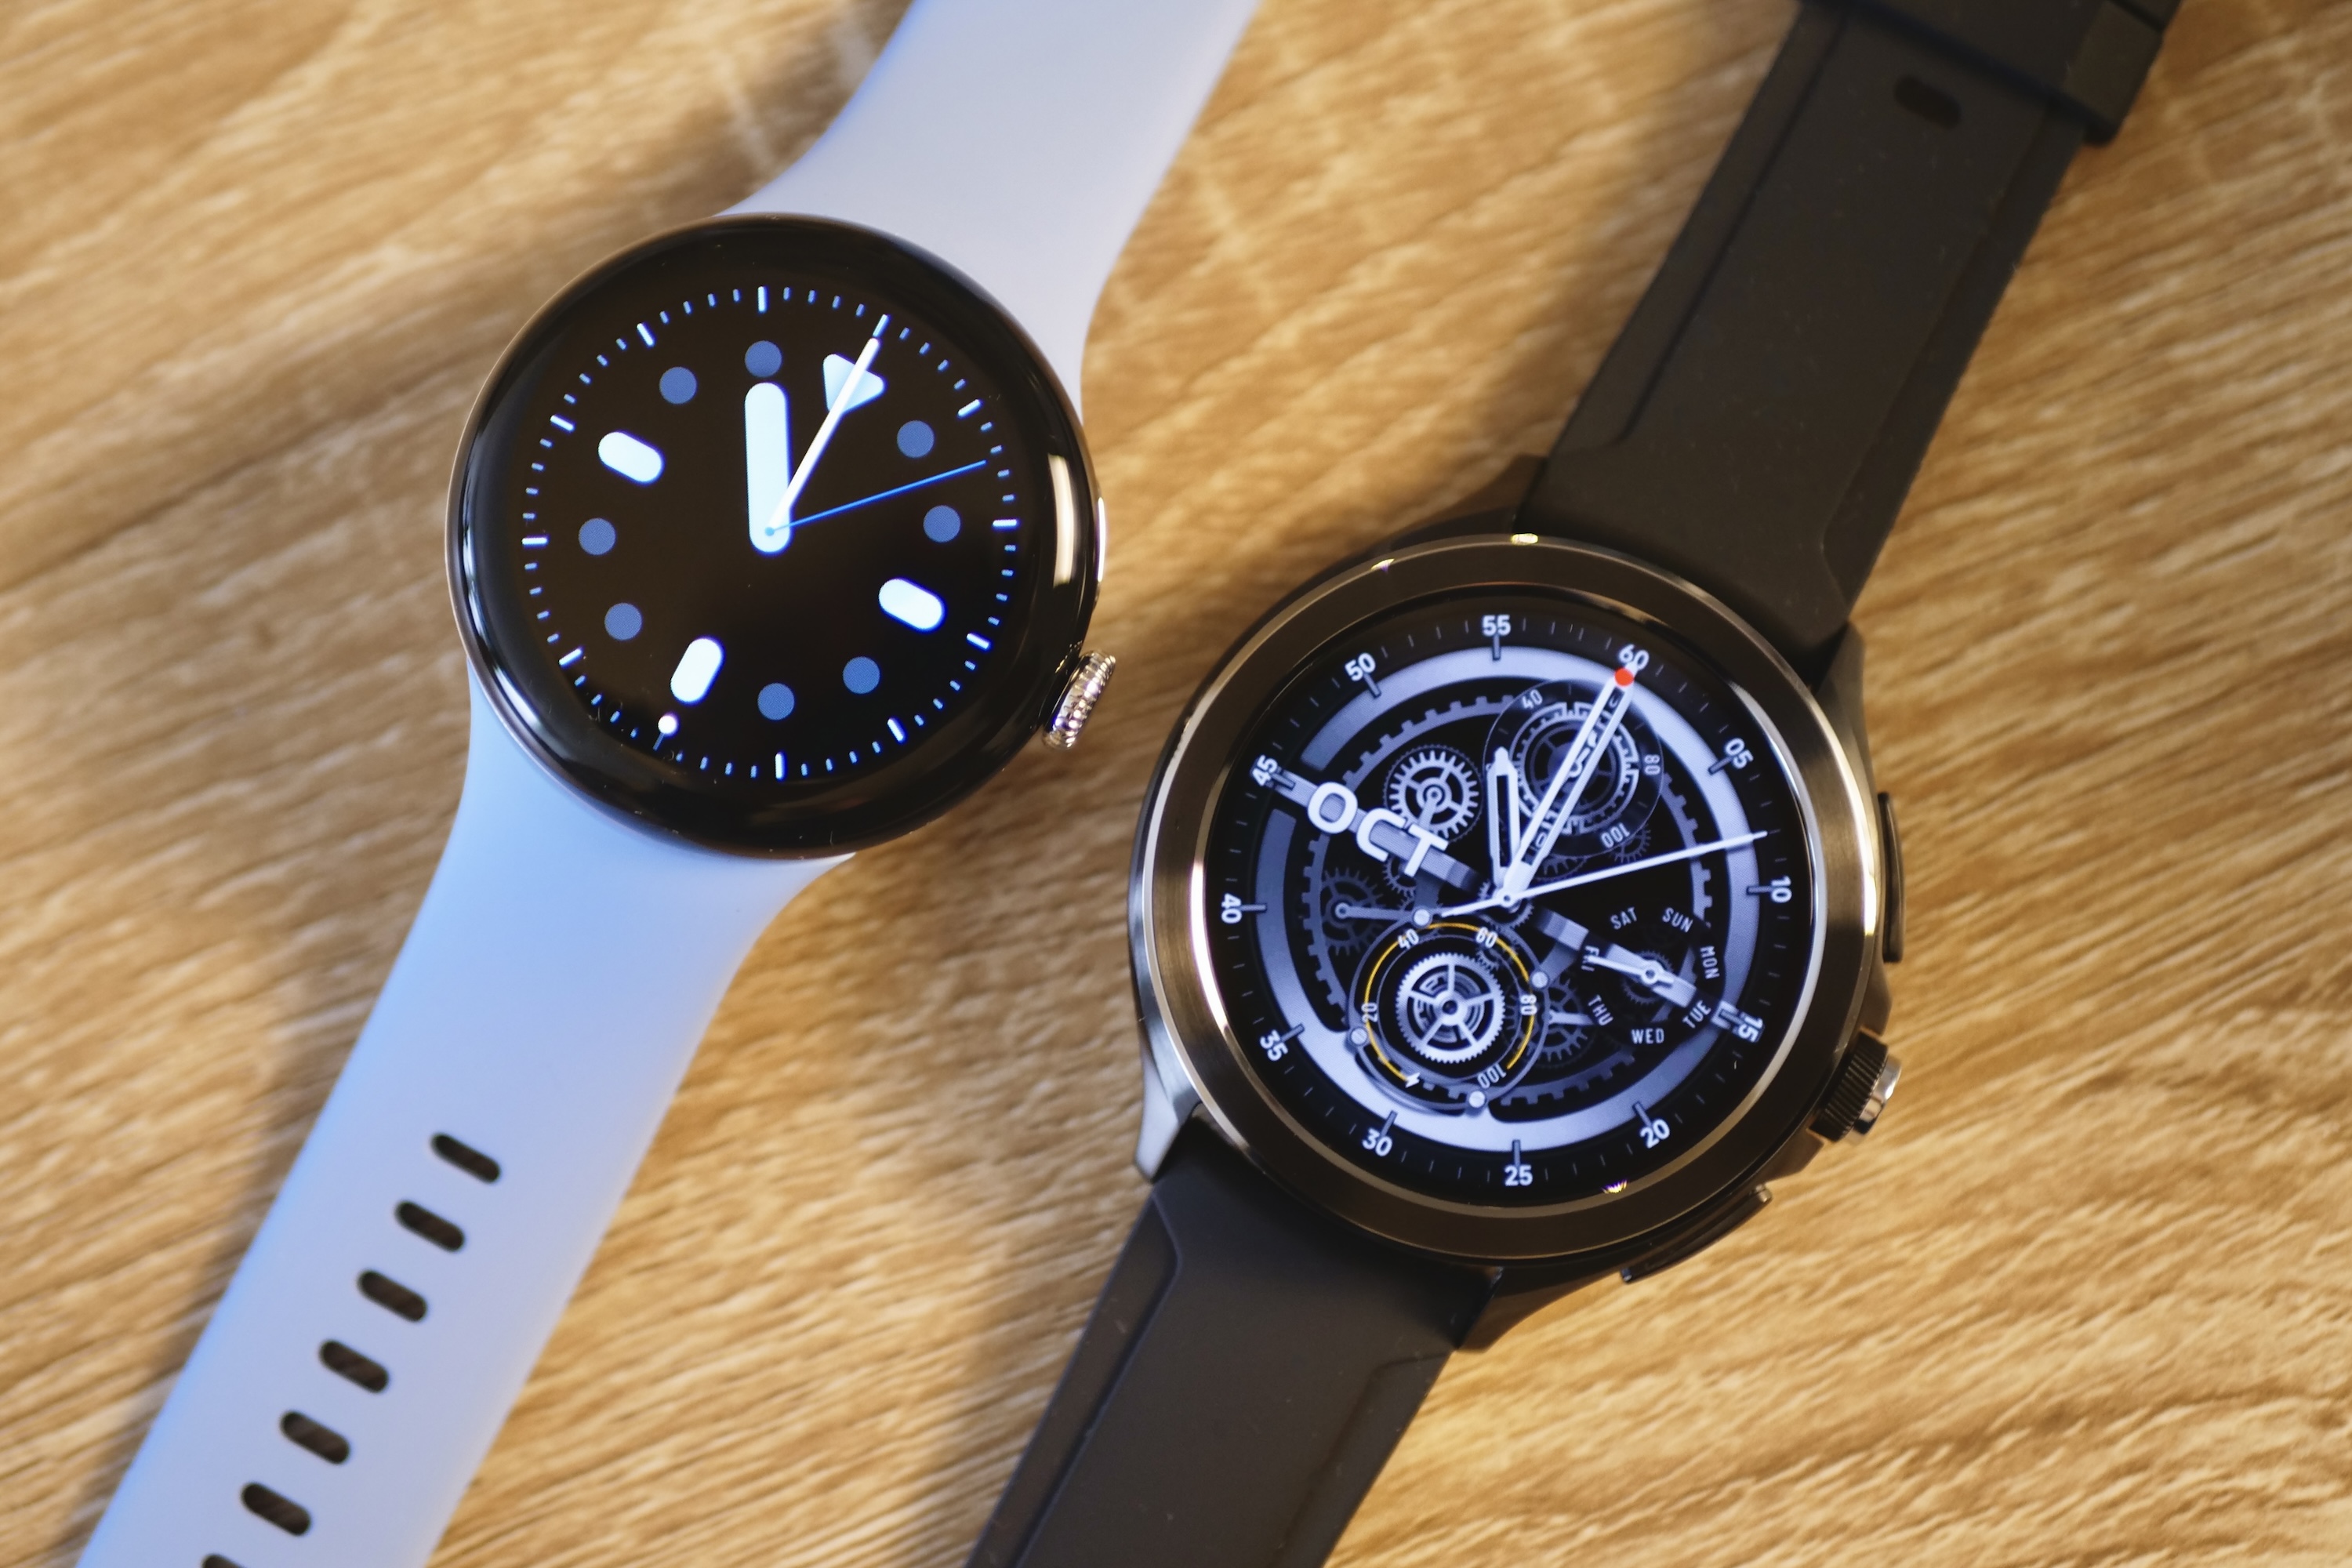 Xiaomi Watch 2 Pro VS Samsung Galaxy Watch6 Classic 